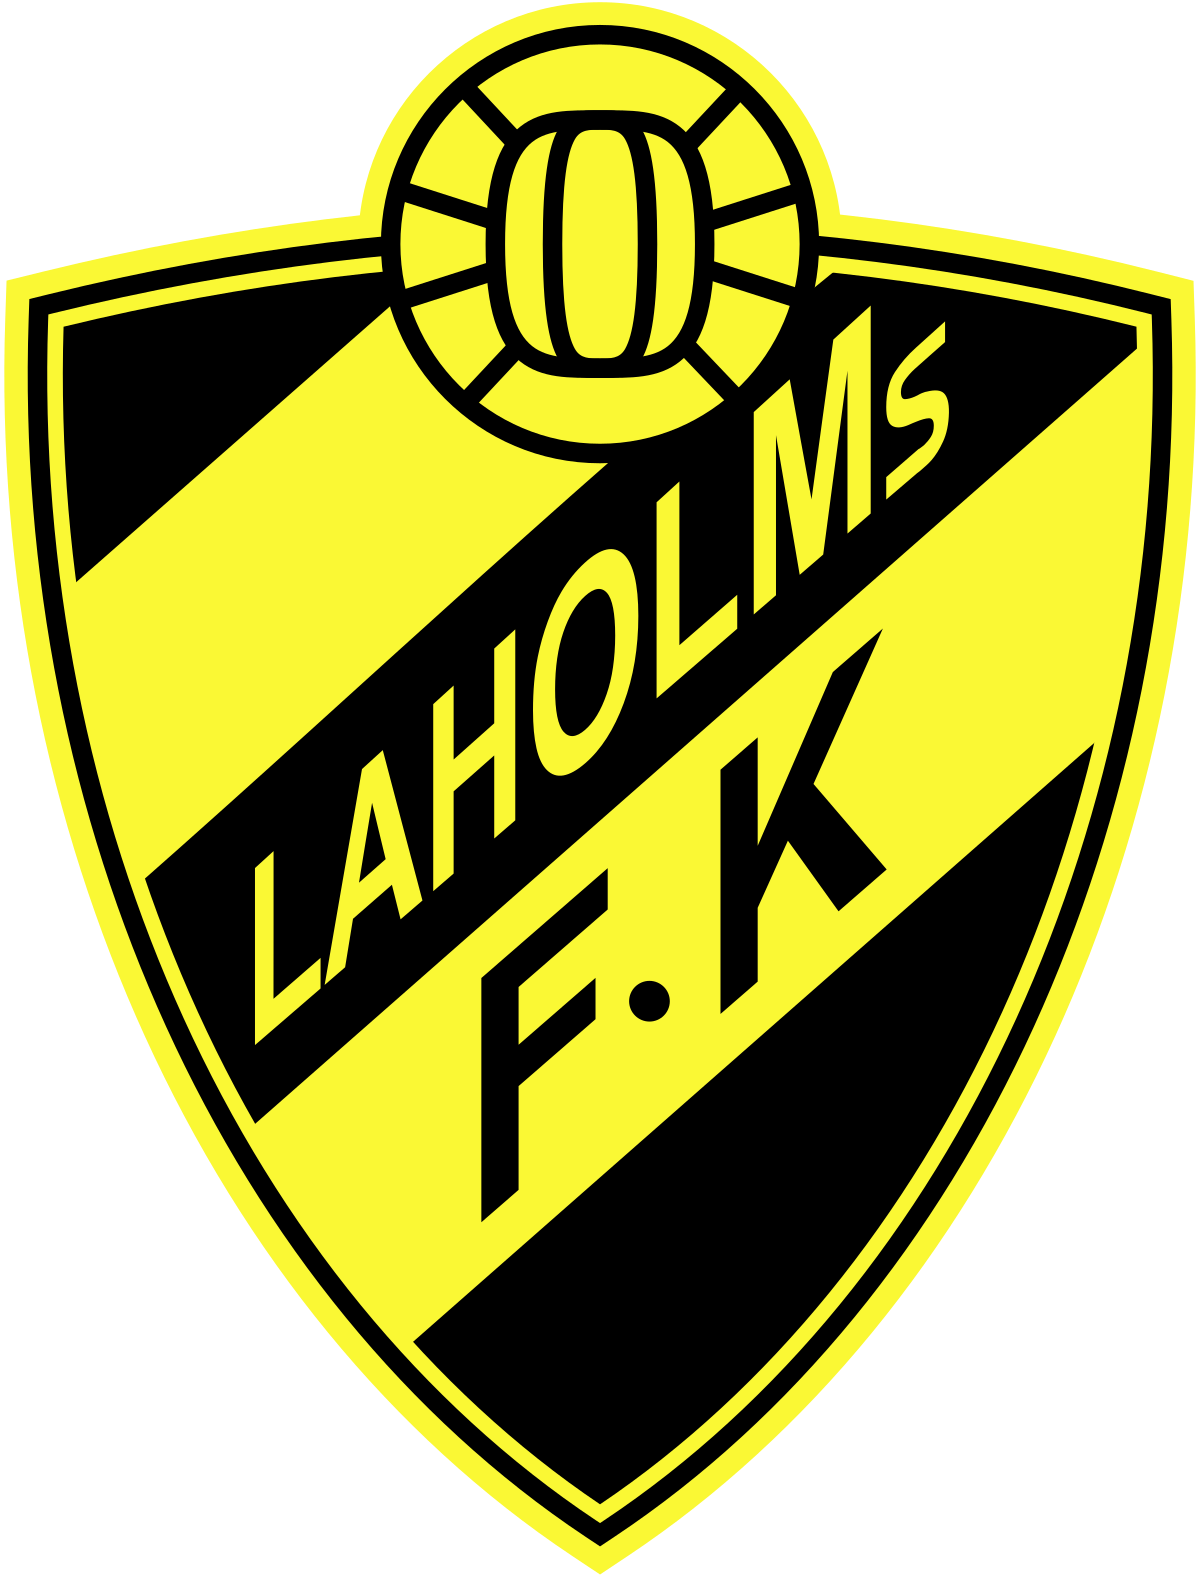 Laholm logo